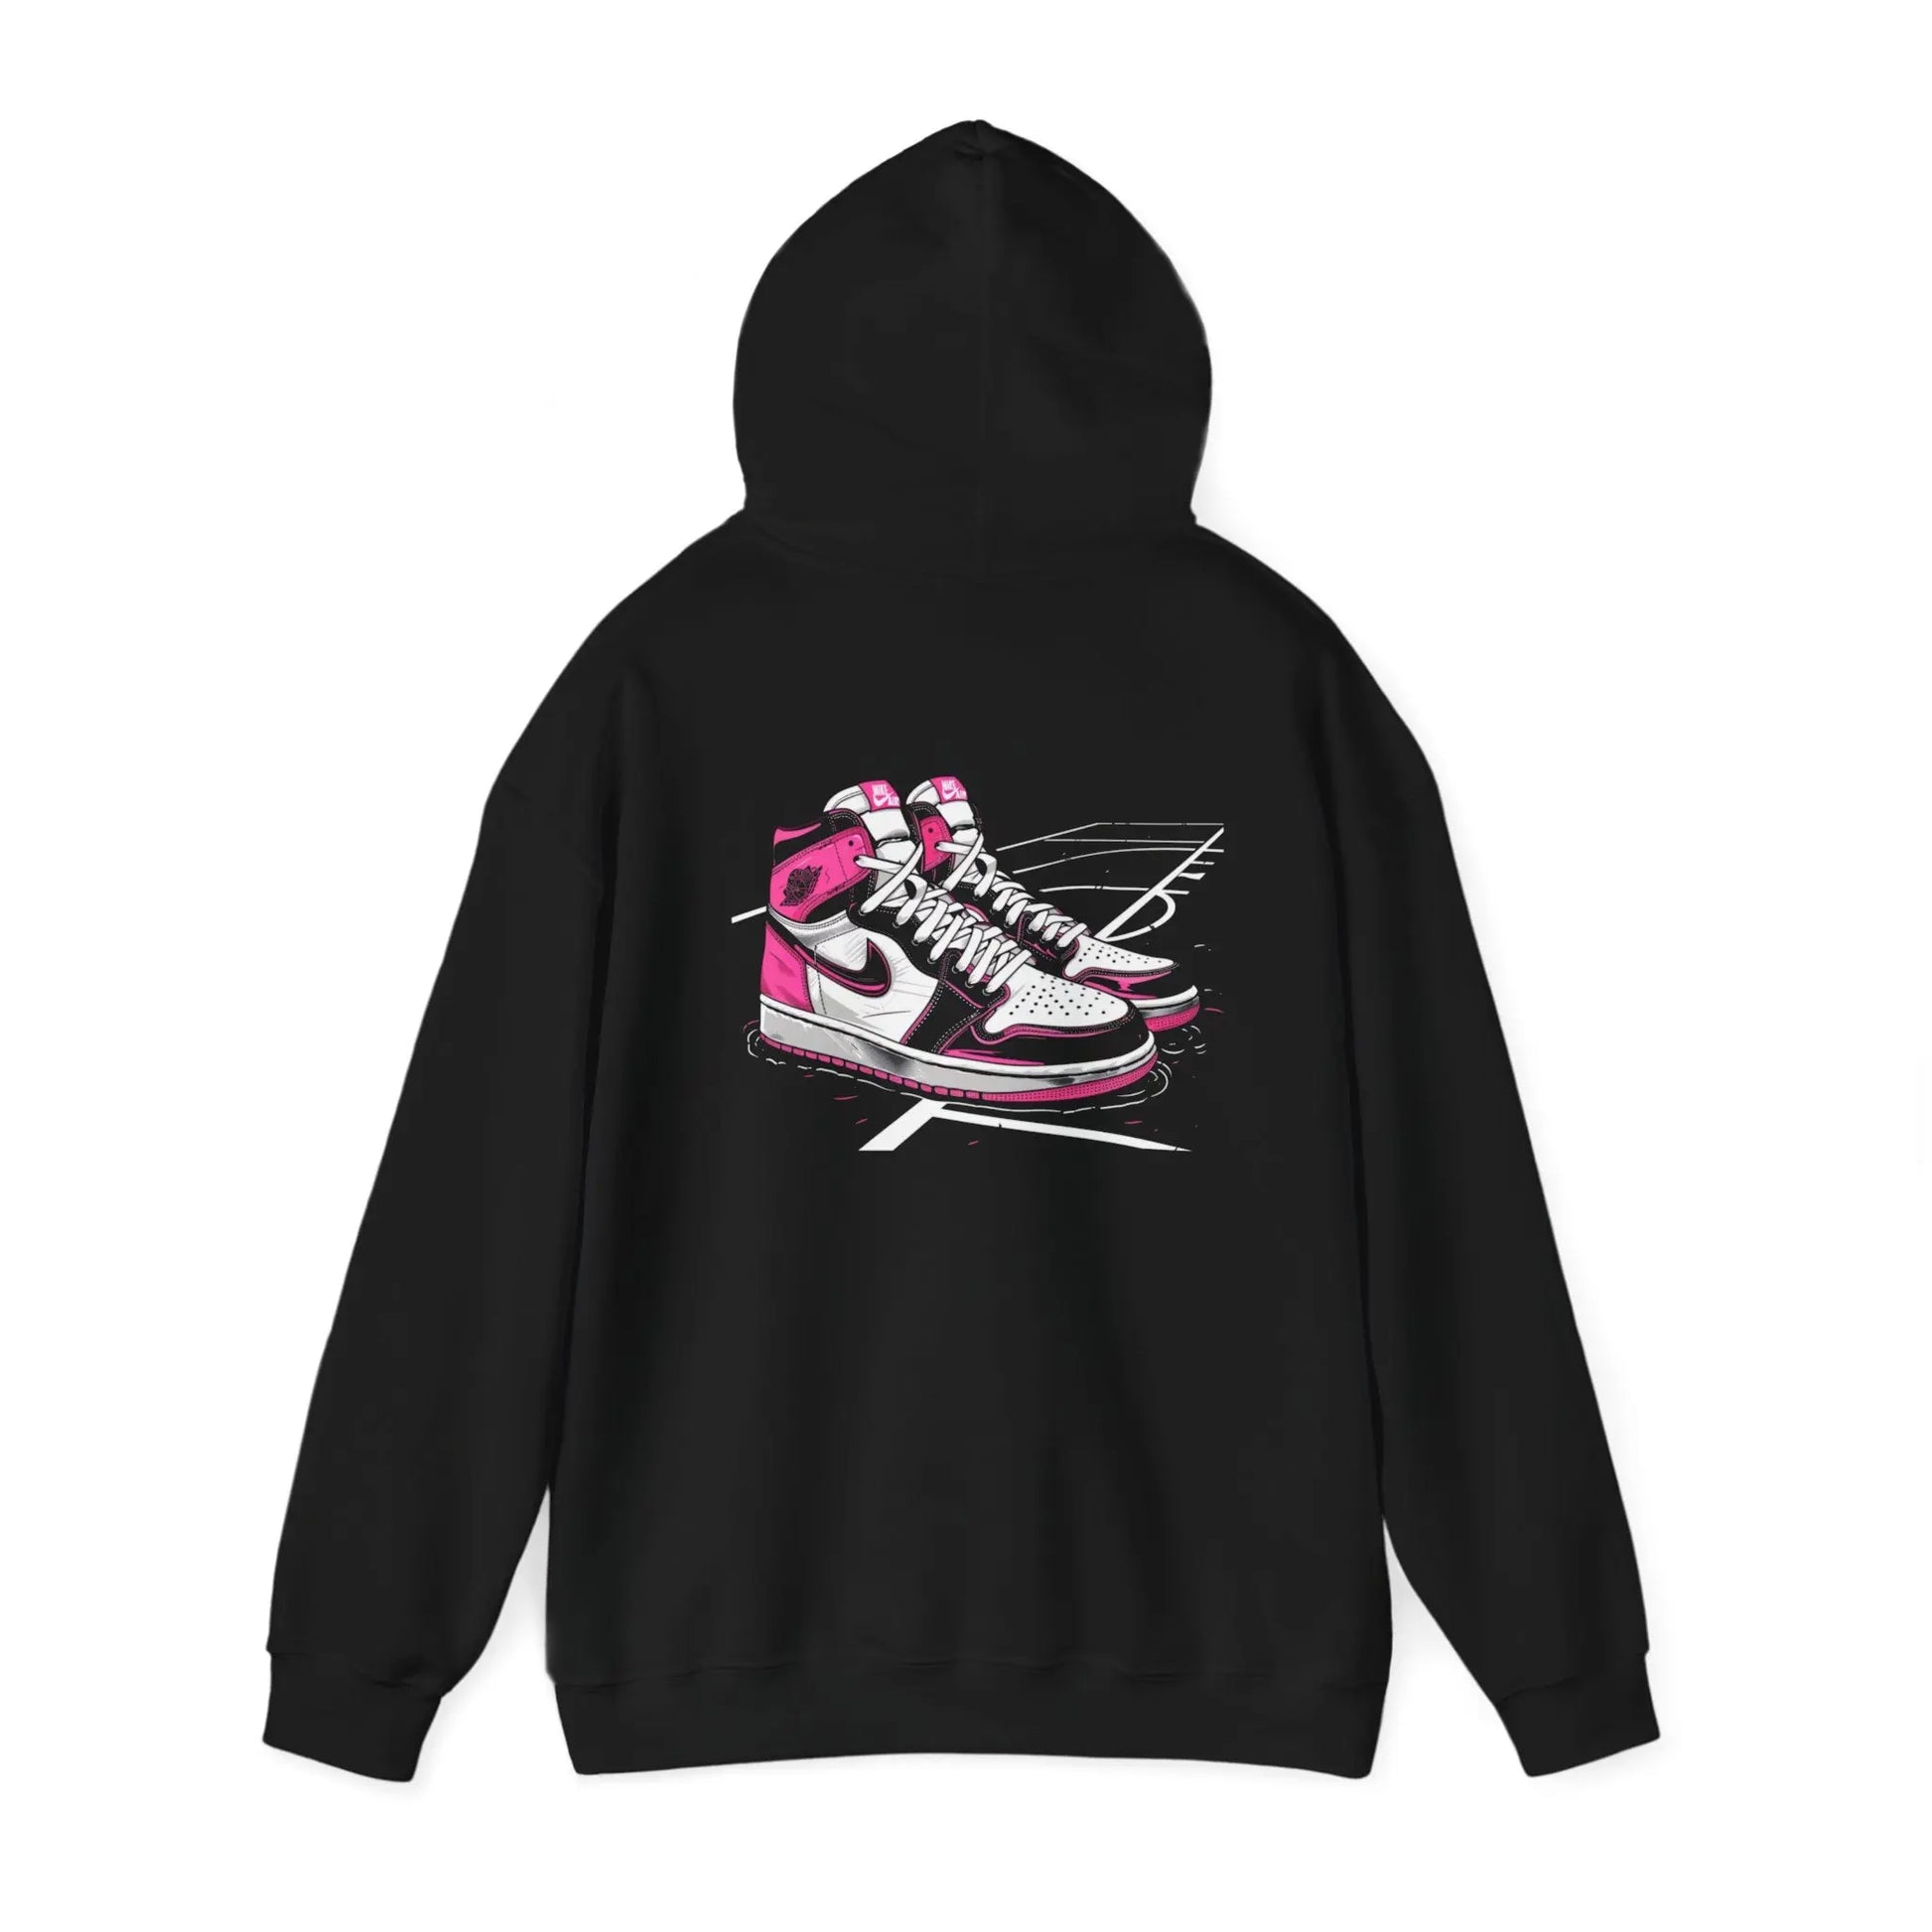 Retro Chic: Pink, Black, and White Air Jordan's on Black Hoodie - AIR Jordan Girl Outfit - Air Jordan Girl Pink - Black Threadz